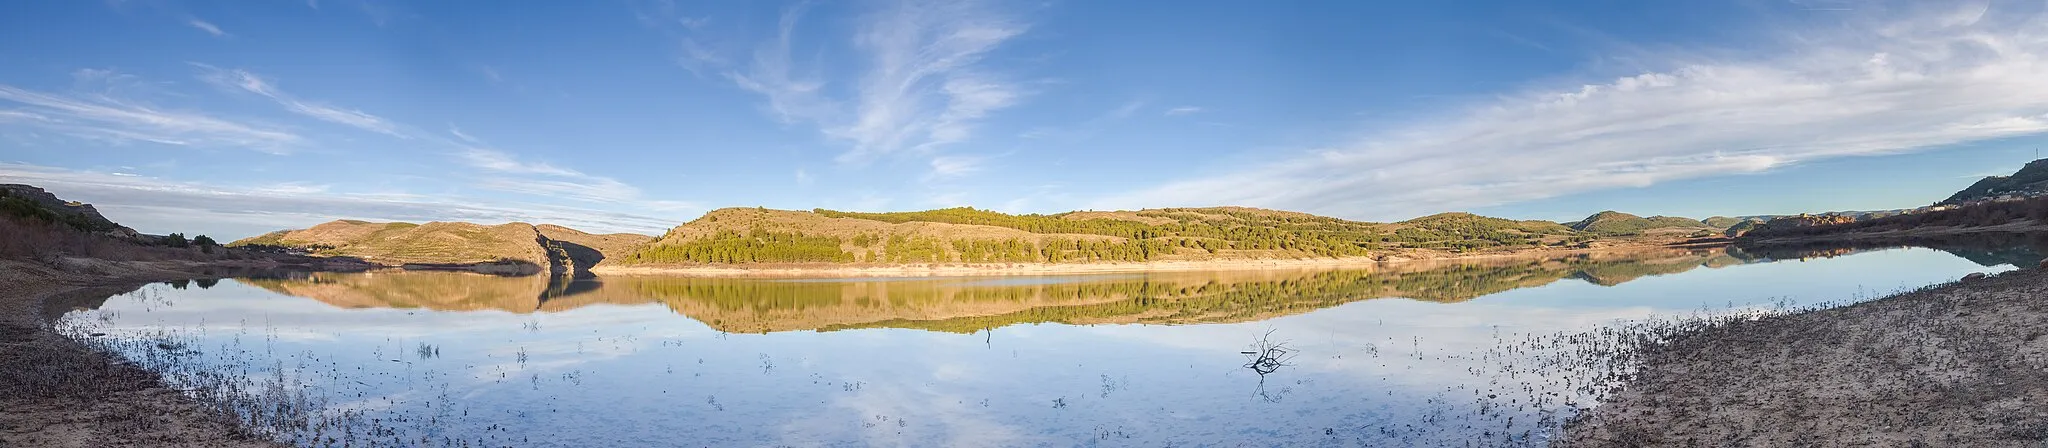 Photo showing: Reservoir of La Tranquera, Zaragoza, Spain